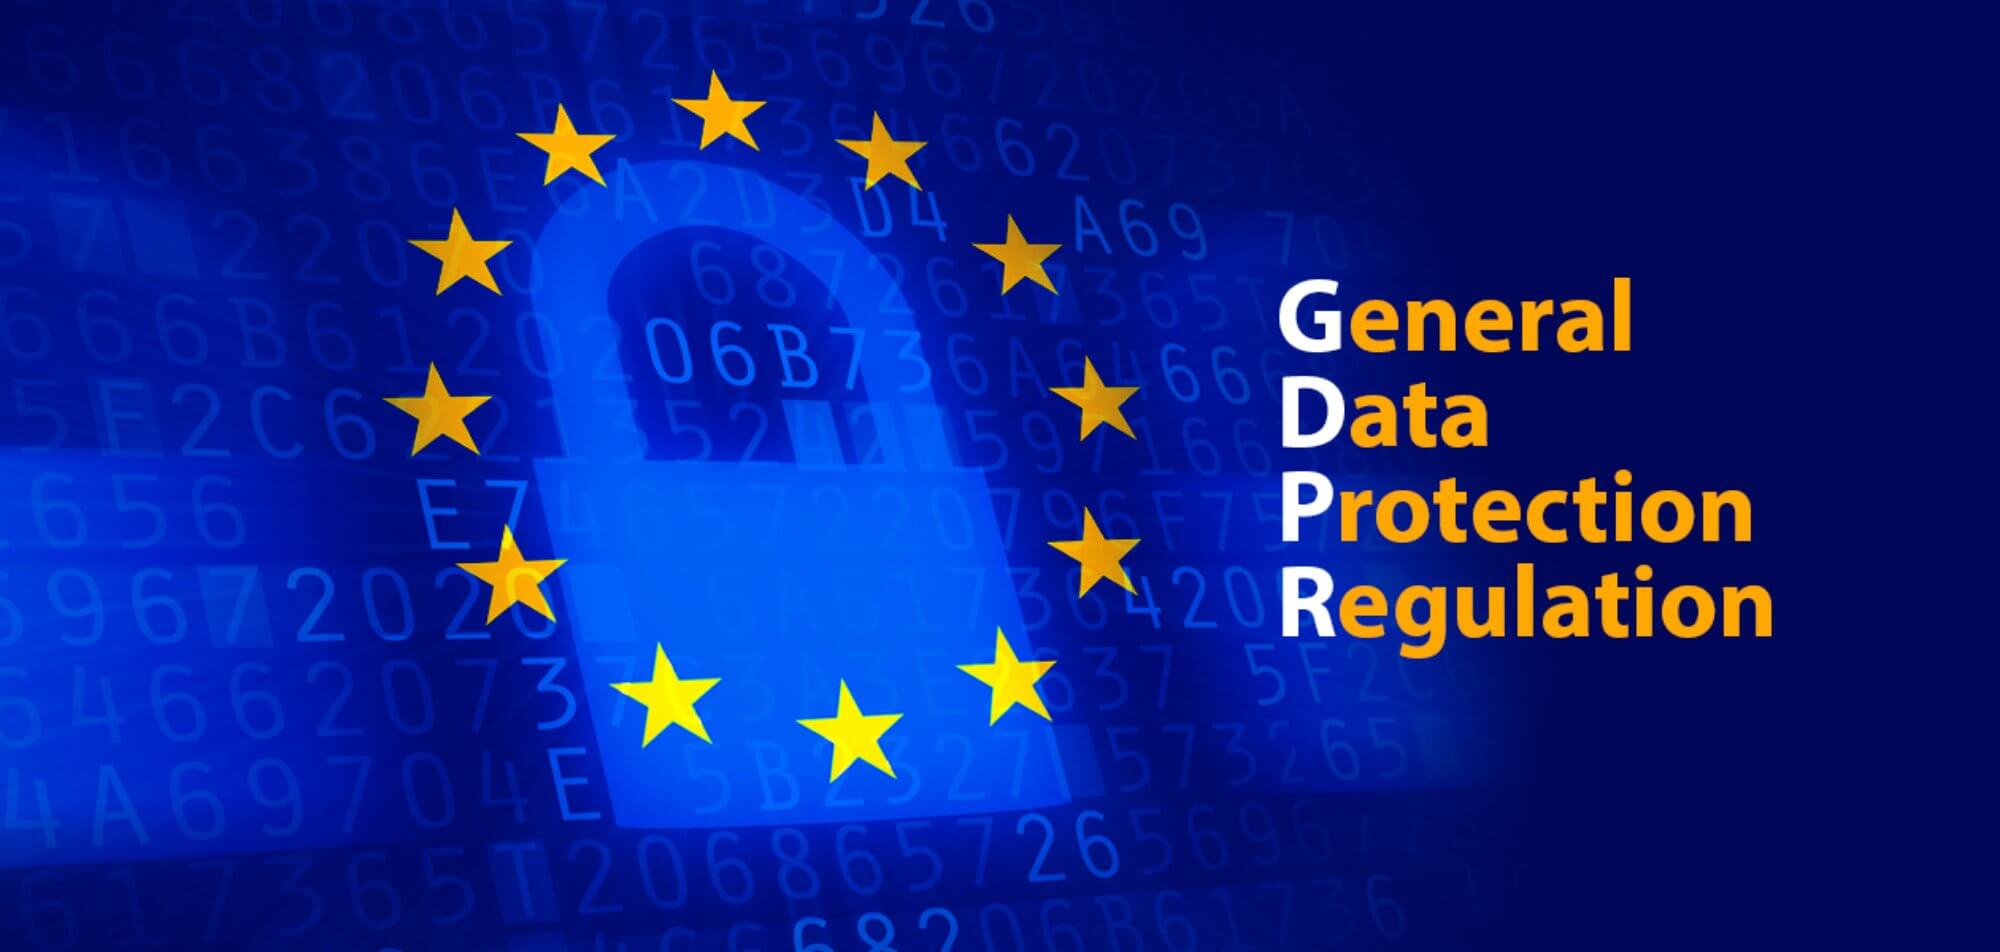 GDPR – General Data Protection Regulation